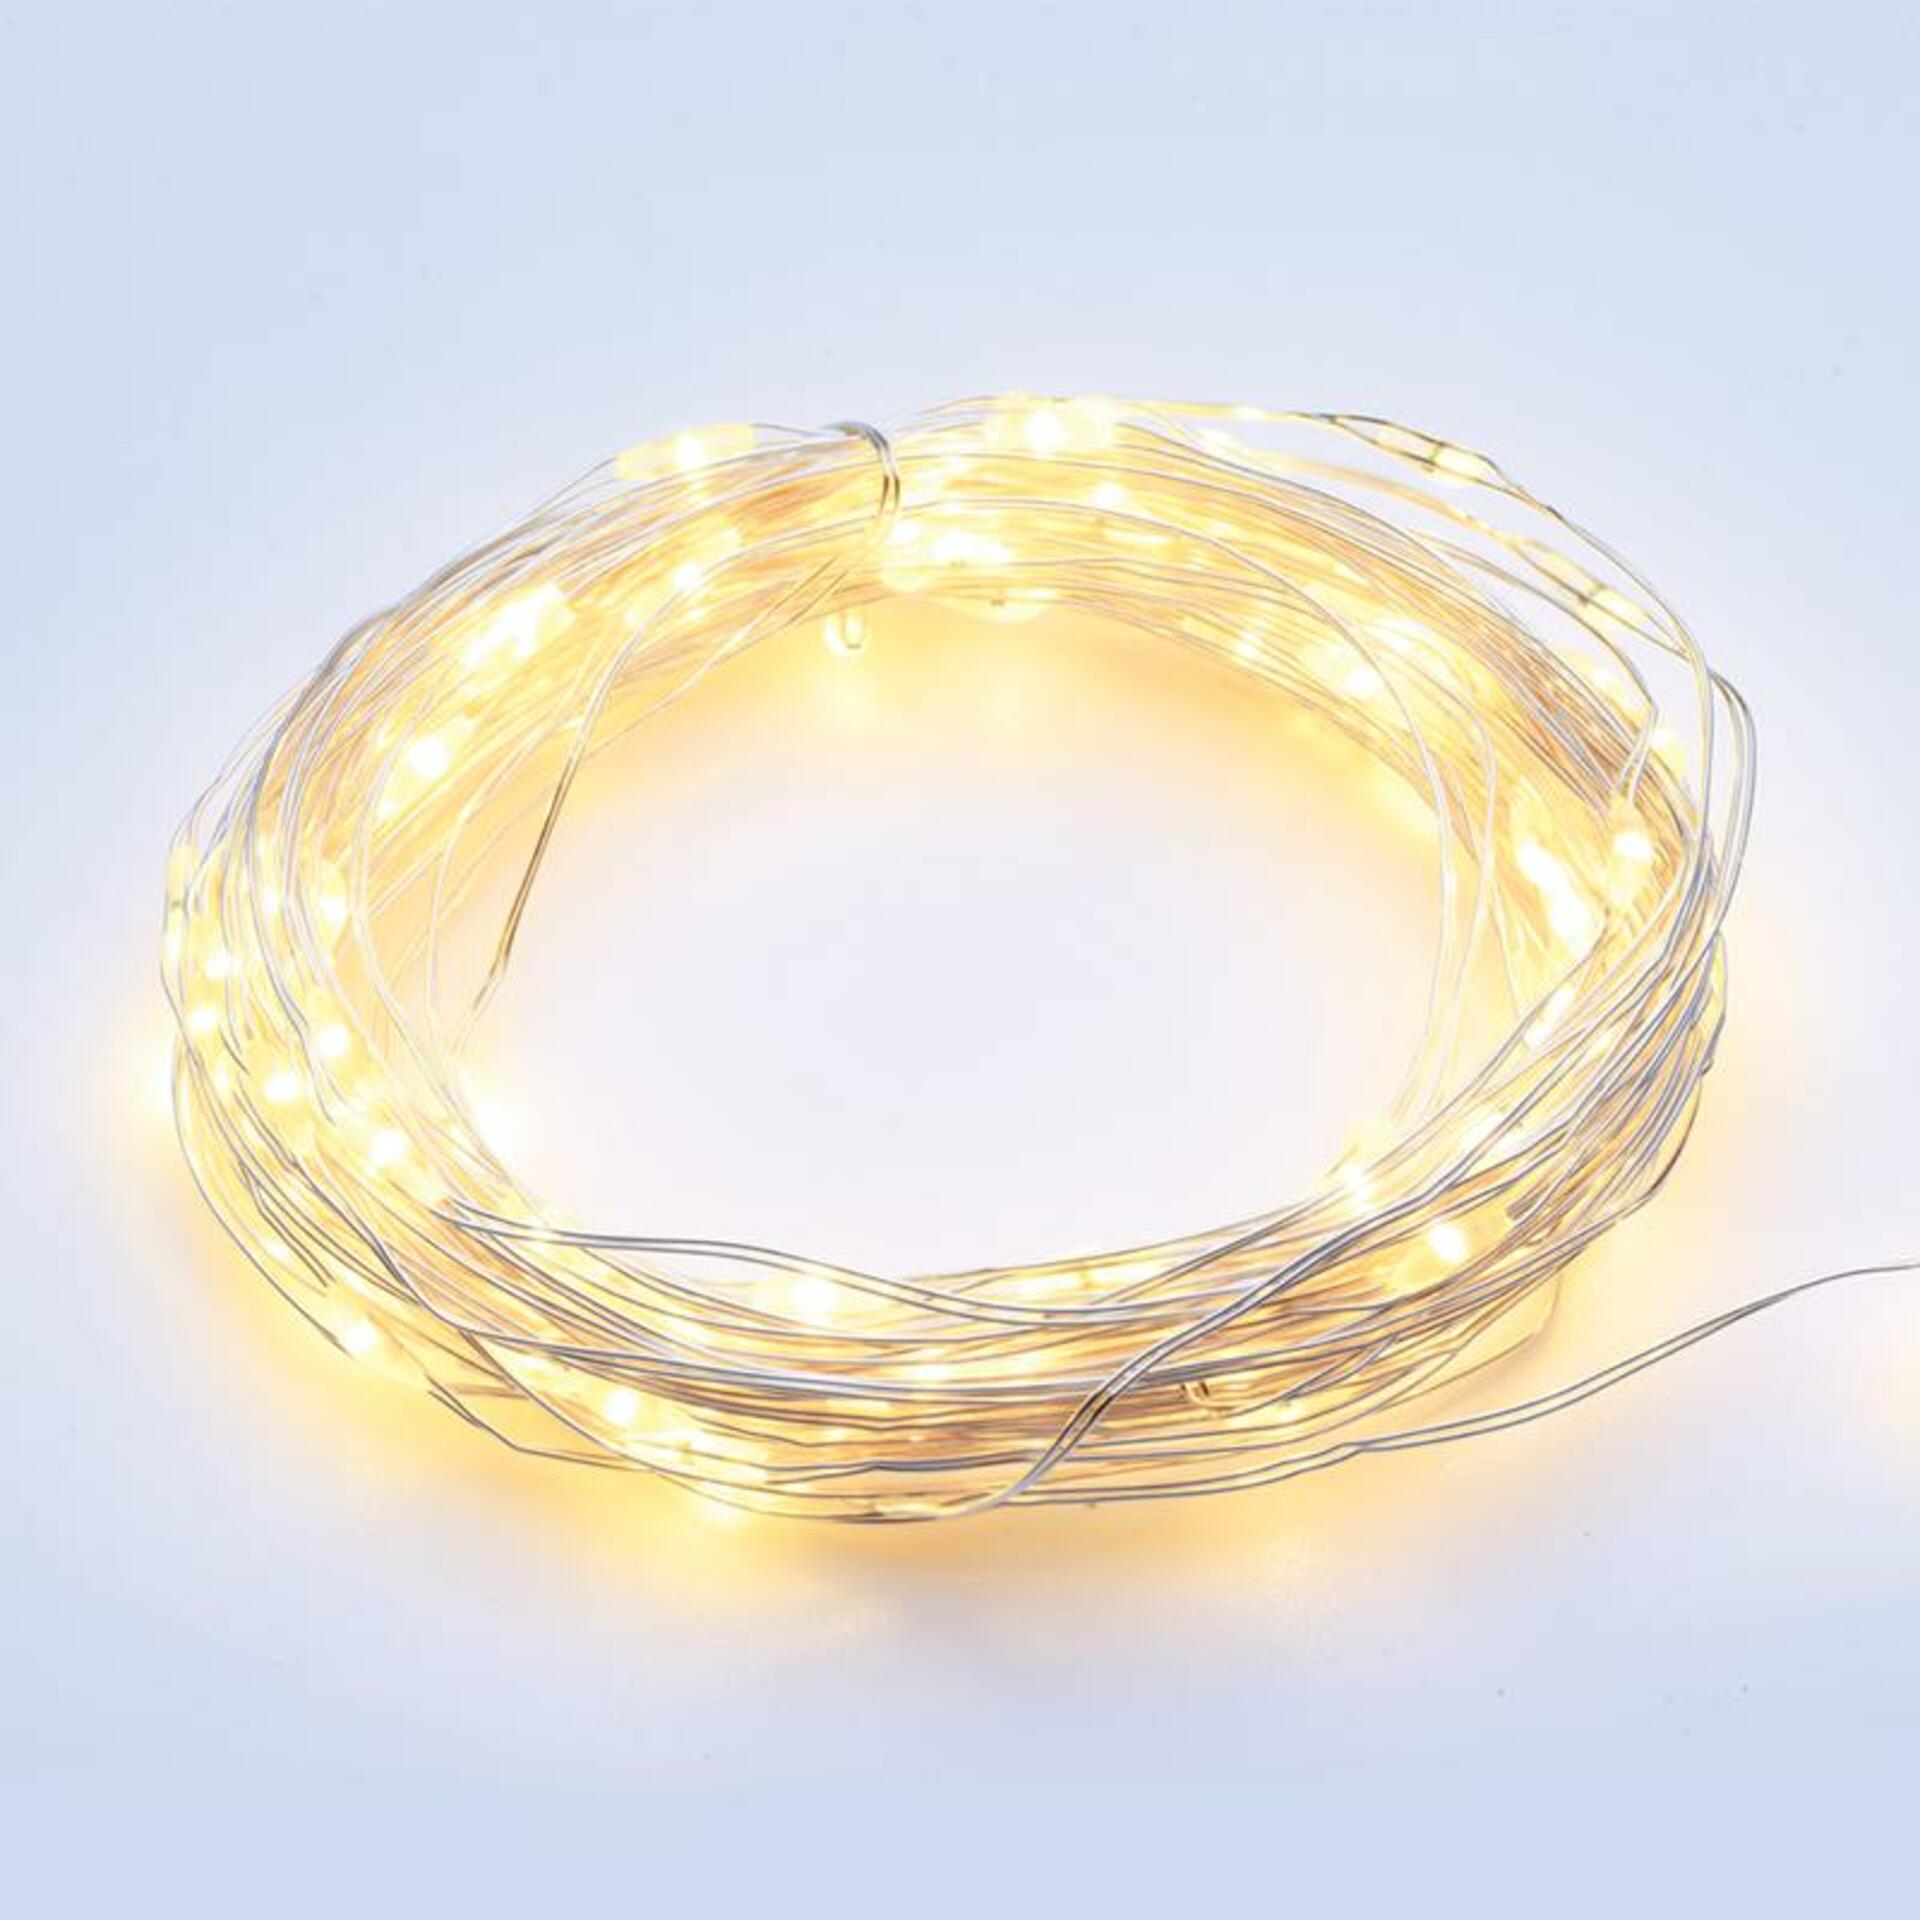 ACA Lighting 20 LED dekorační řetěz WW stříbrný měďený kabel na baterie 2xAA IP20 2m+10cm 1.2W X0120111